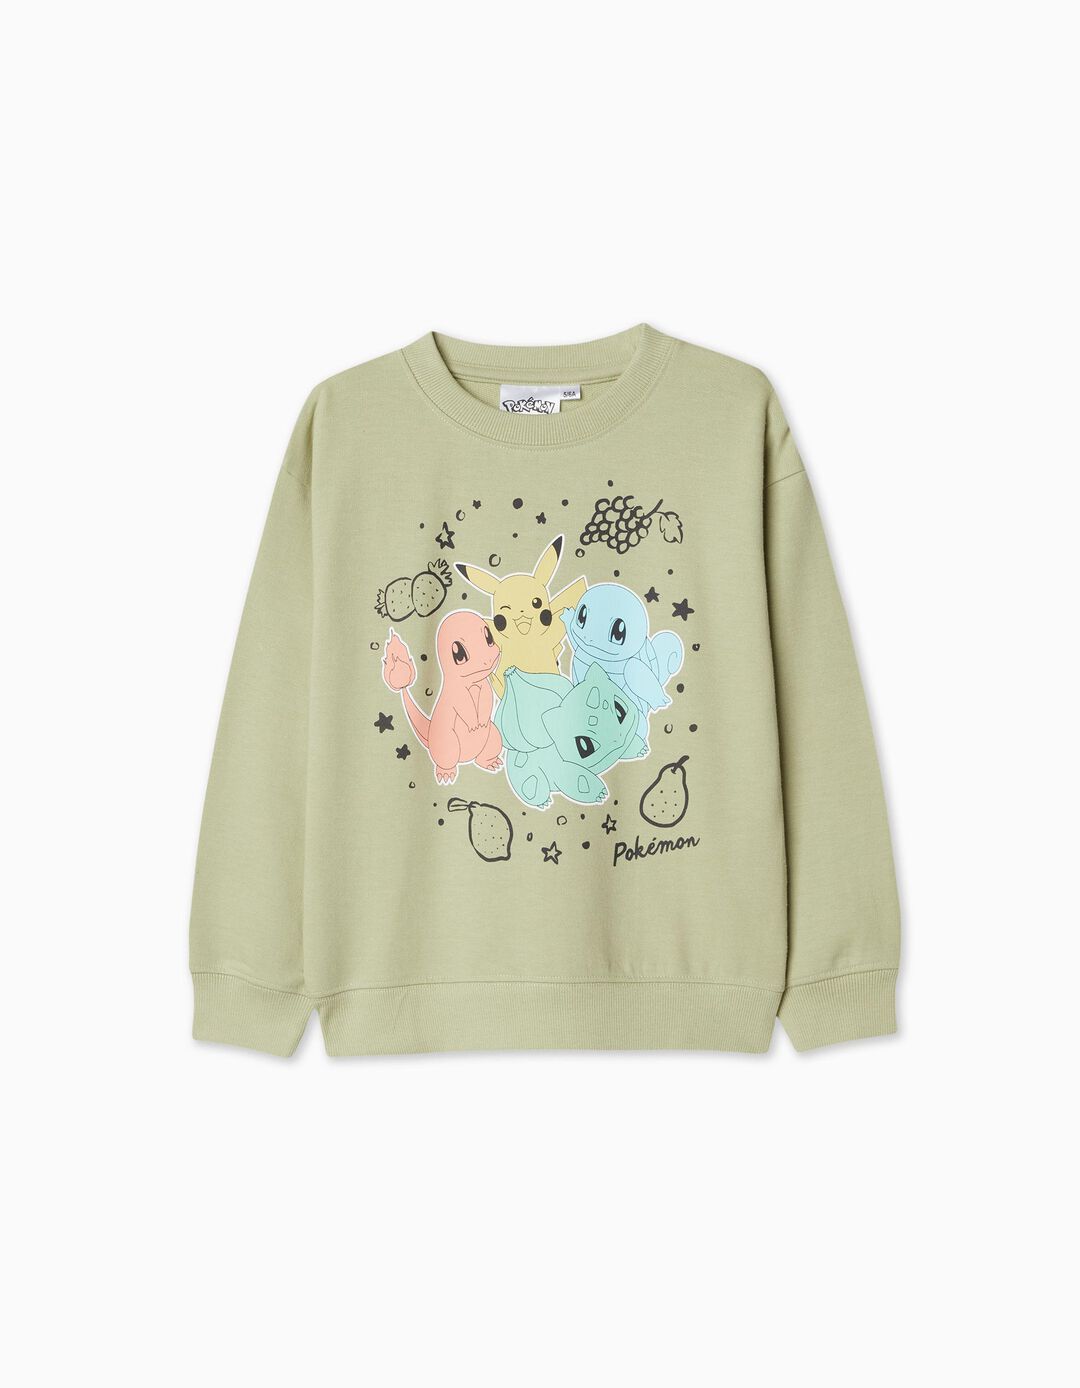 'Pokémon' Sweatshirt, Girl, Light Green